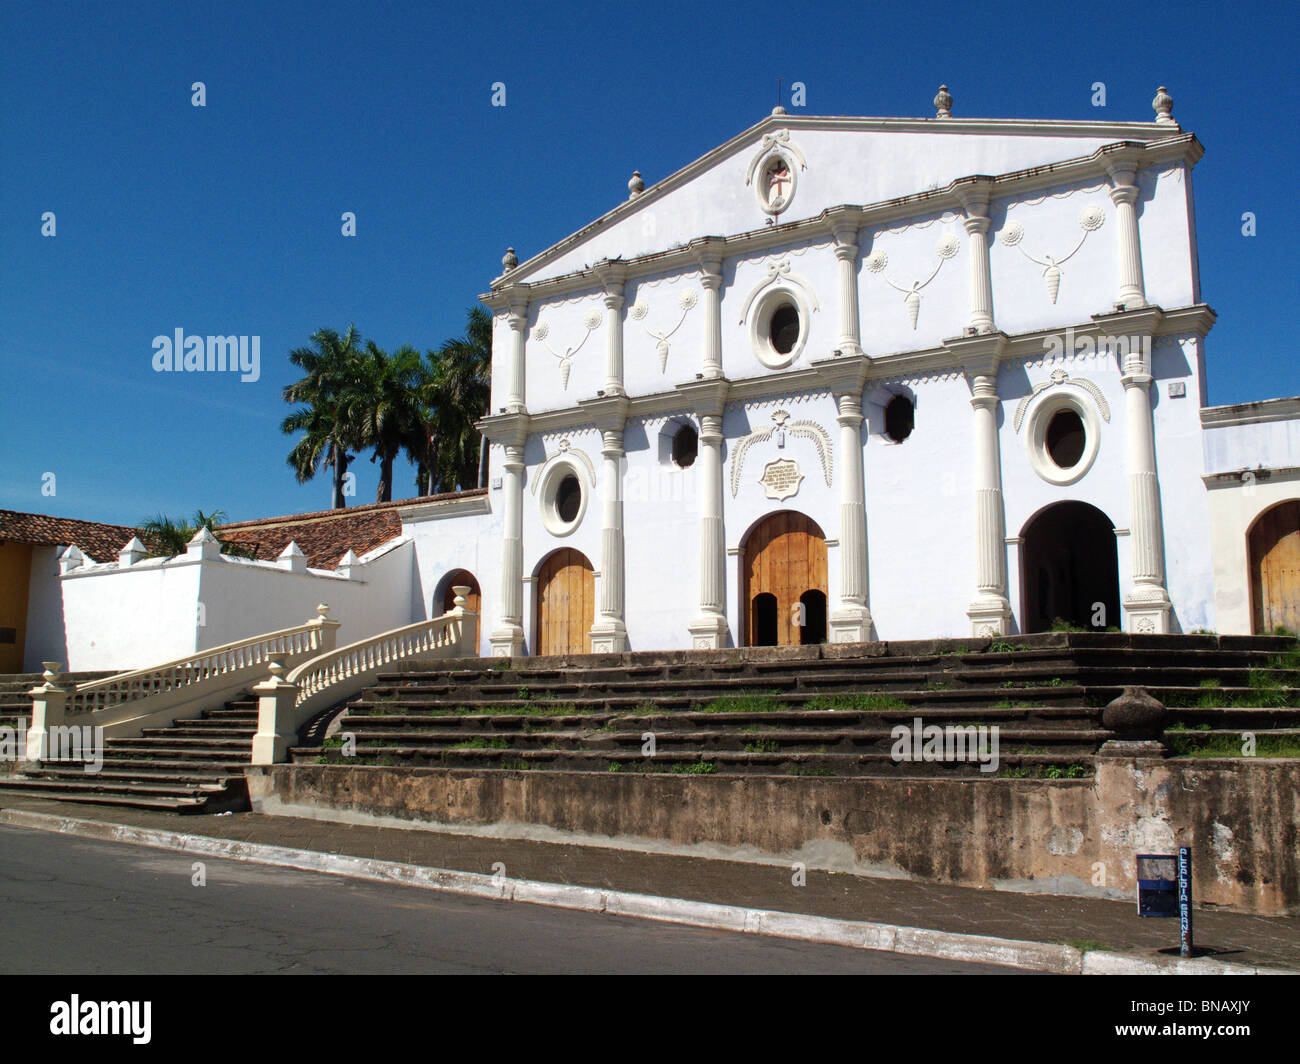 The San Francisco and Museo Antiguo Convento in Granada in Nicaragua Stock Photo